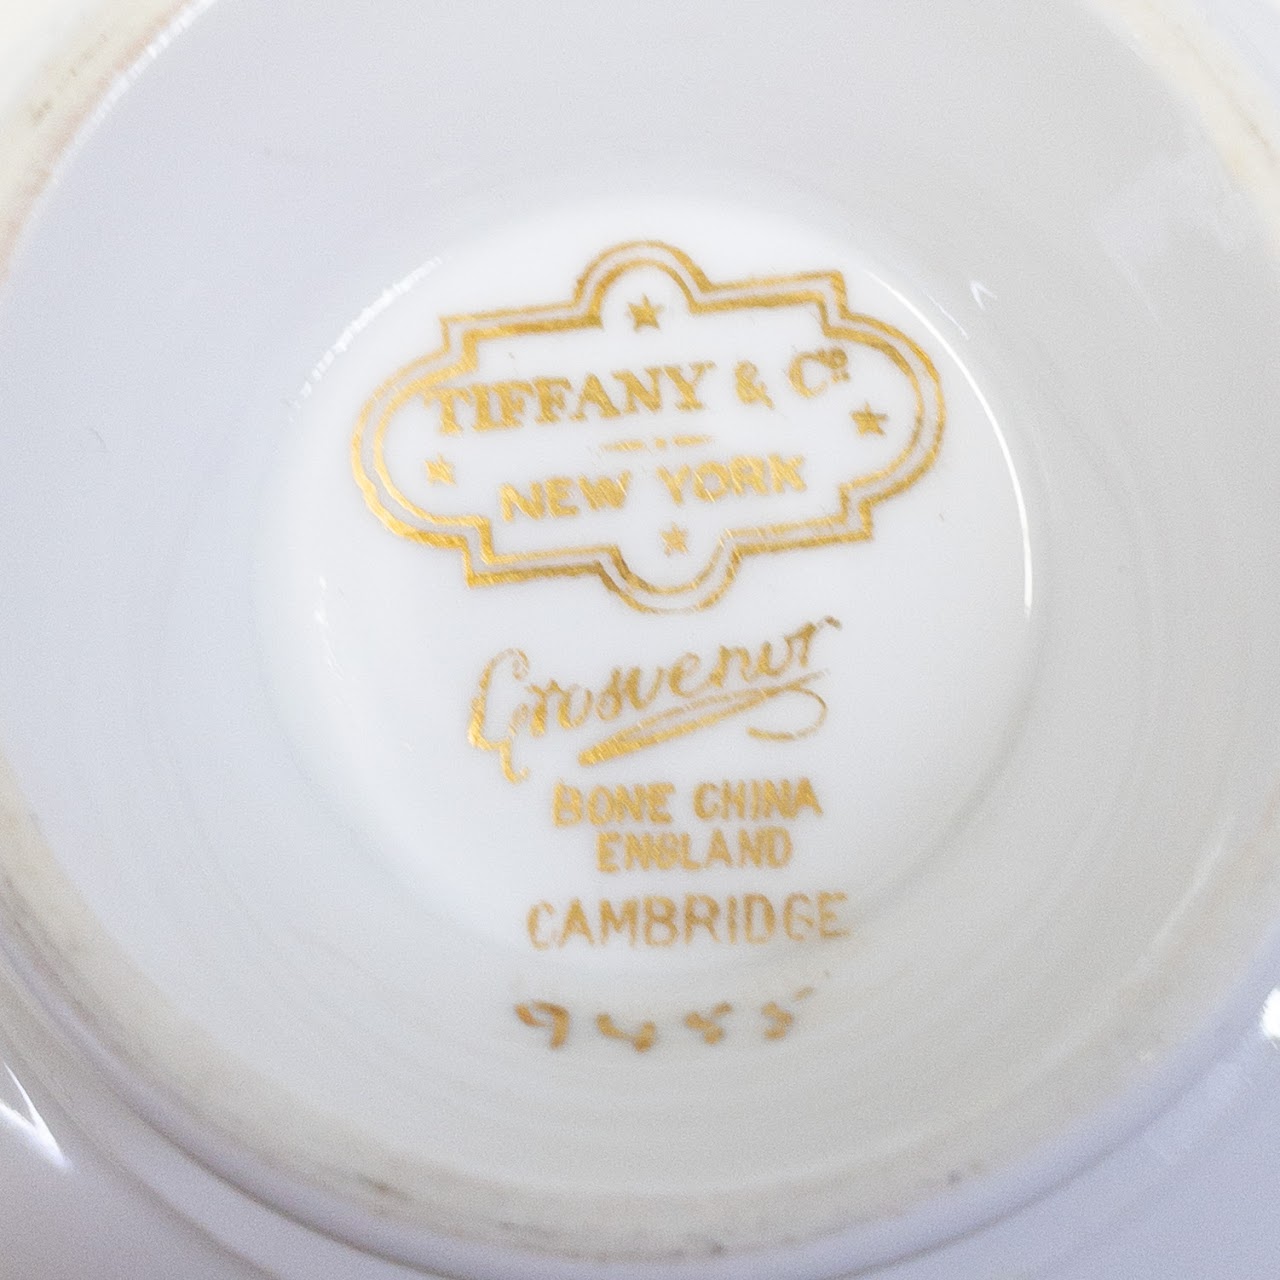 Tiffany & Co. Grosvenor England Tea Cup & Saucer